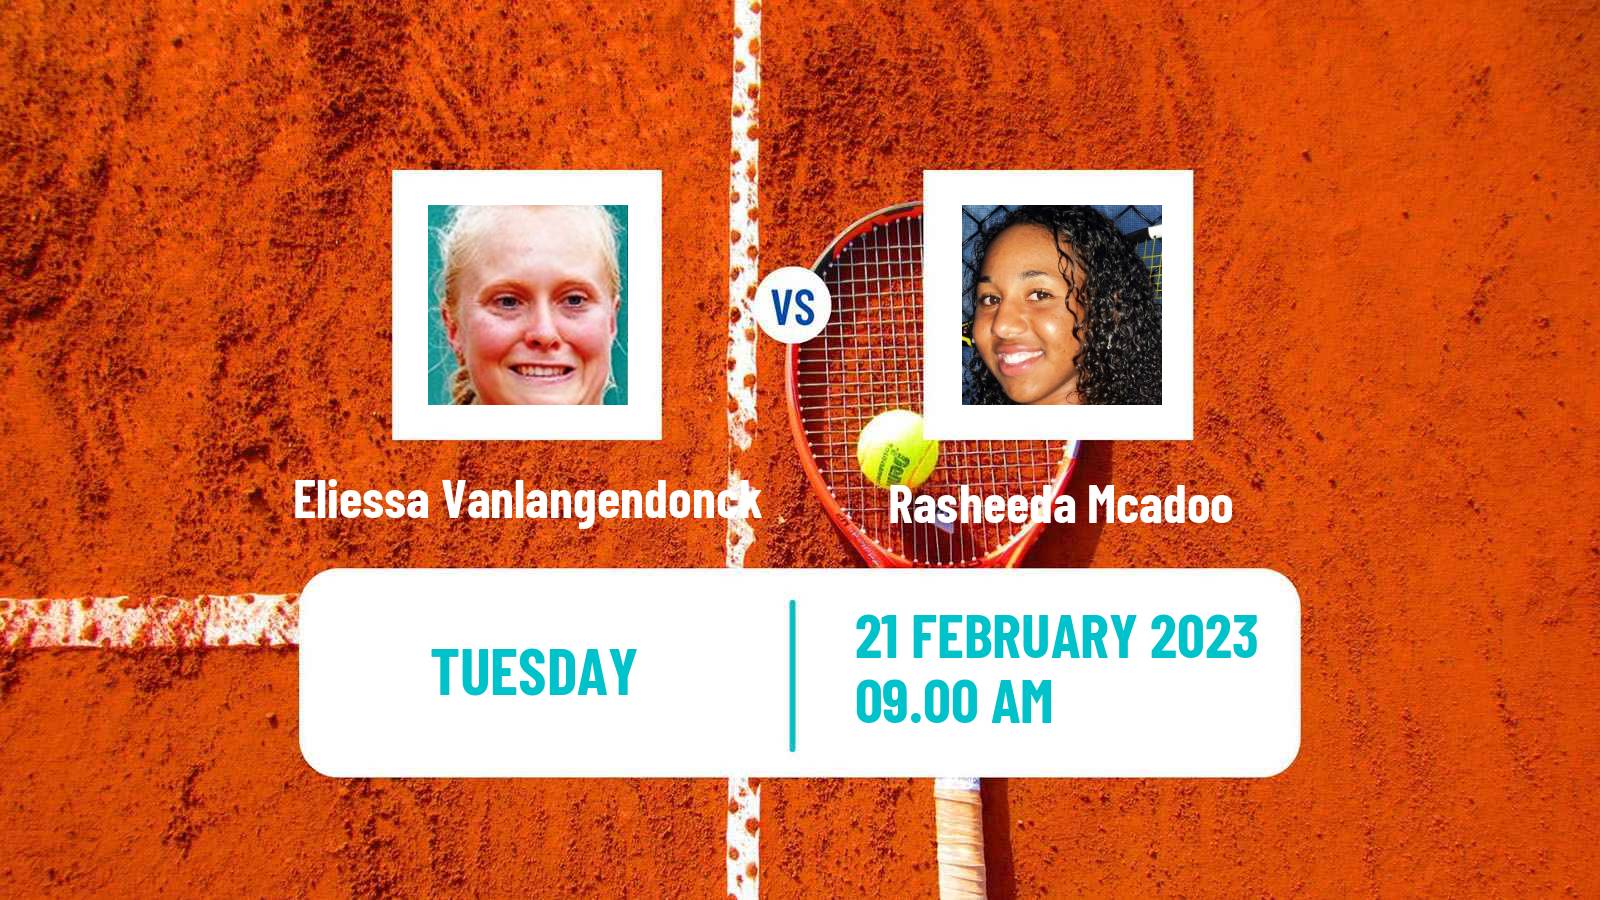 Tennis ITF Tournaments Eliessa Vanlangendonck - Rasheeda Mcadoo